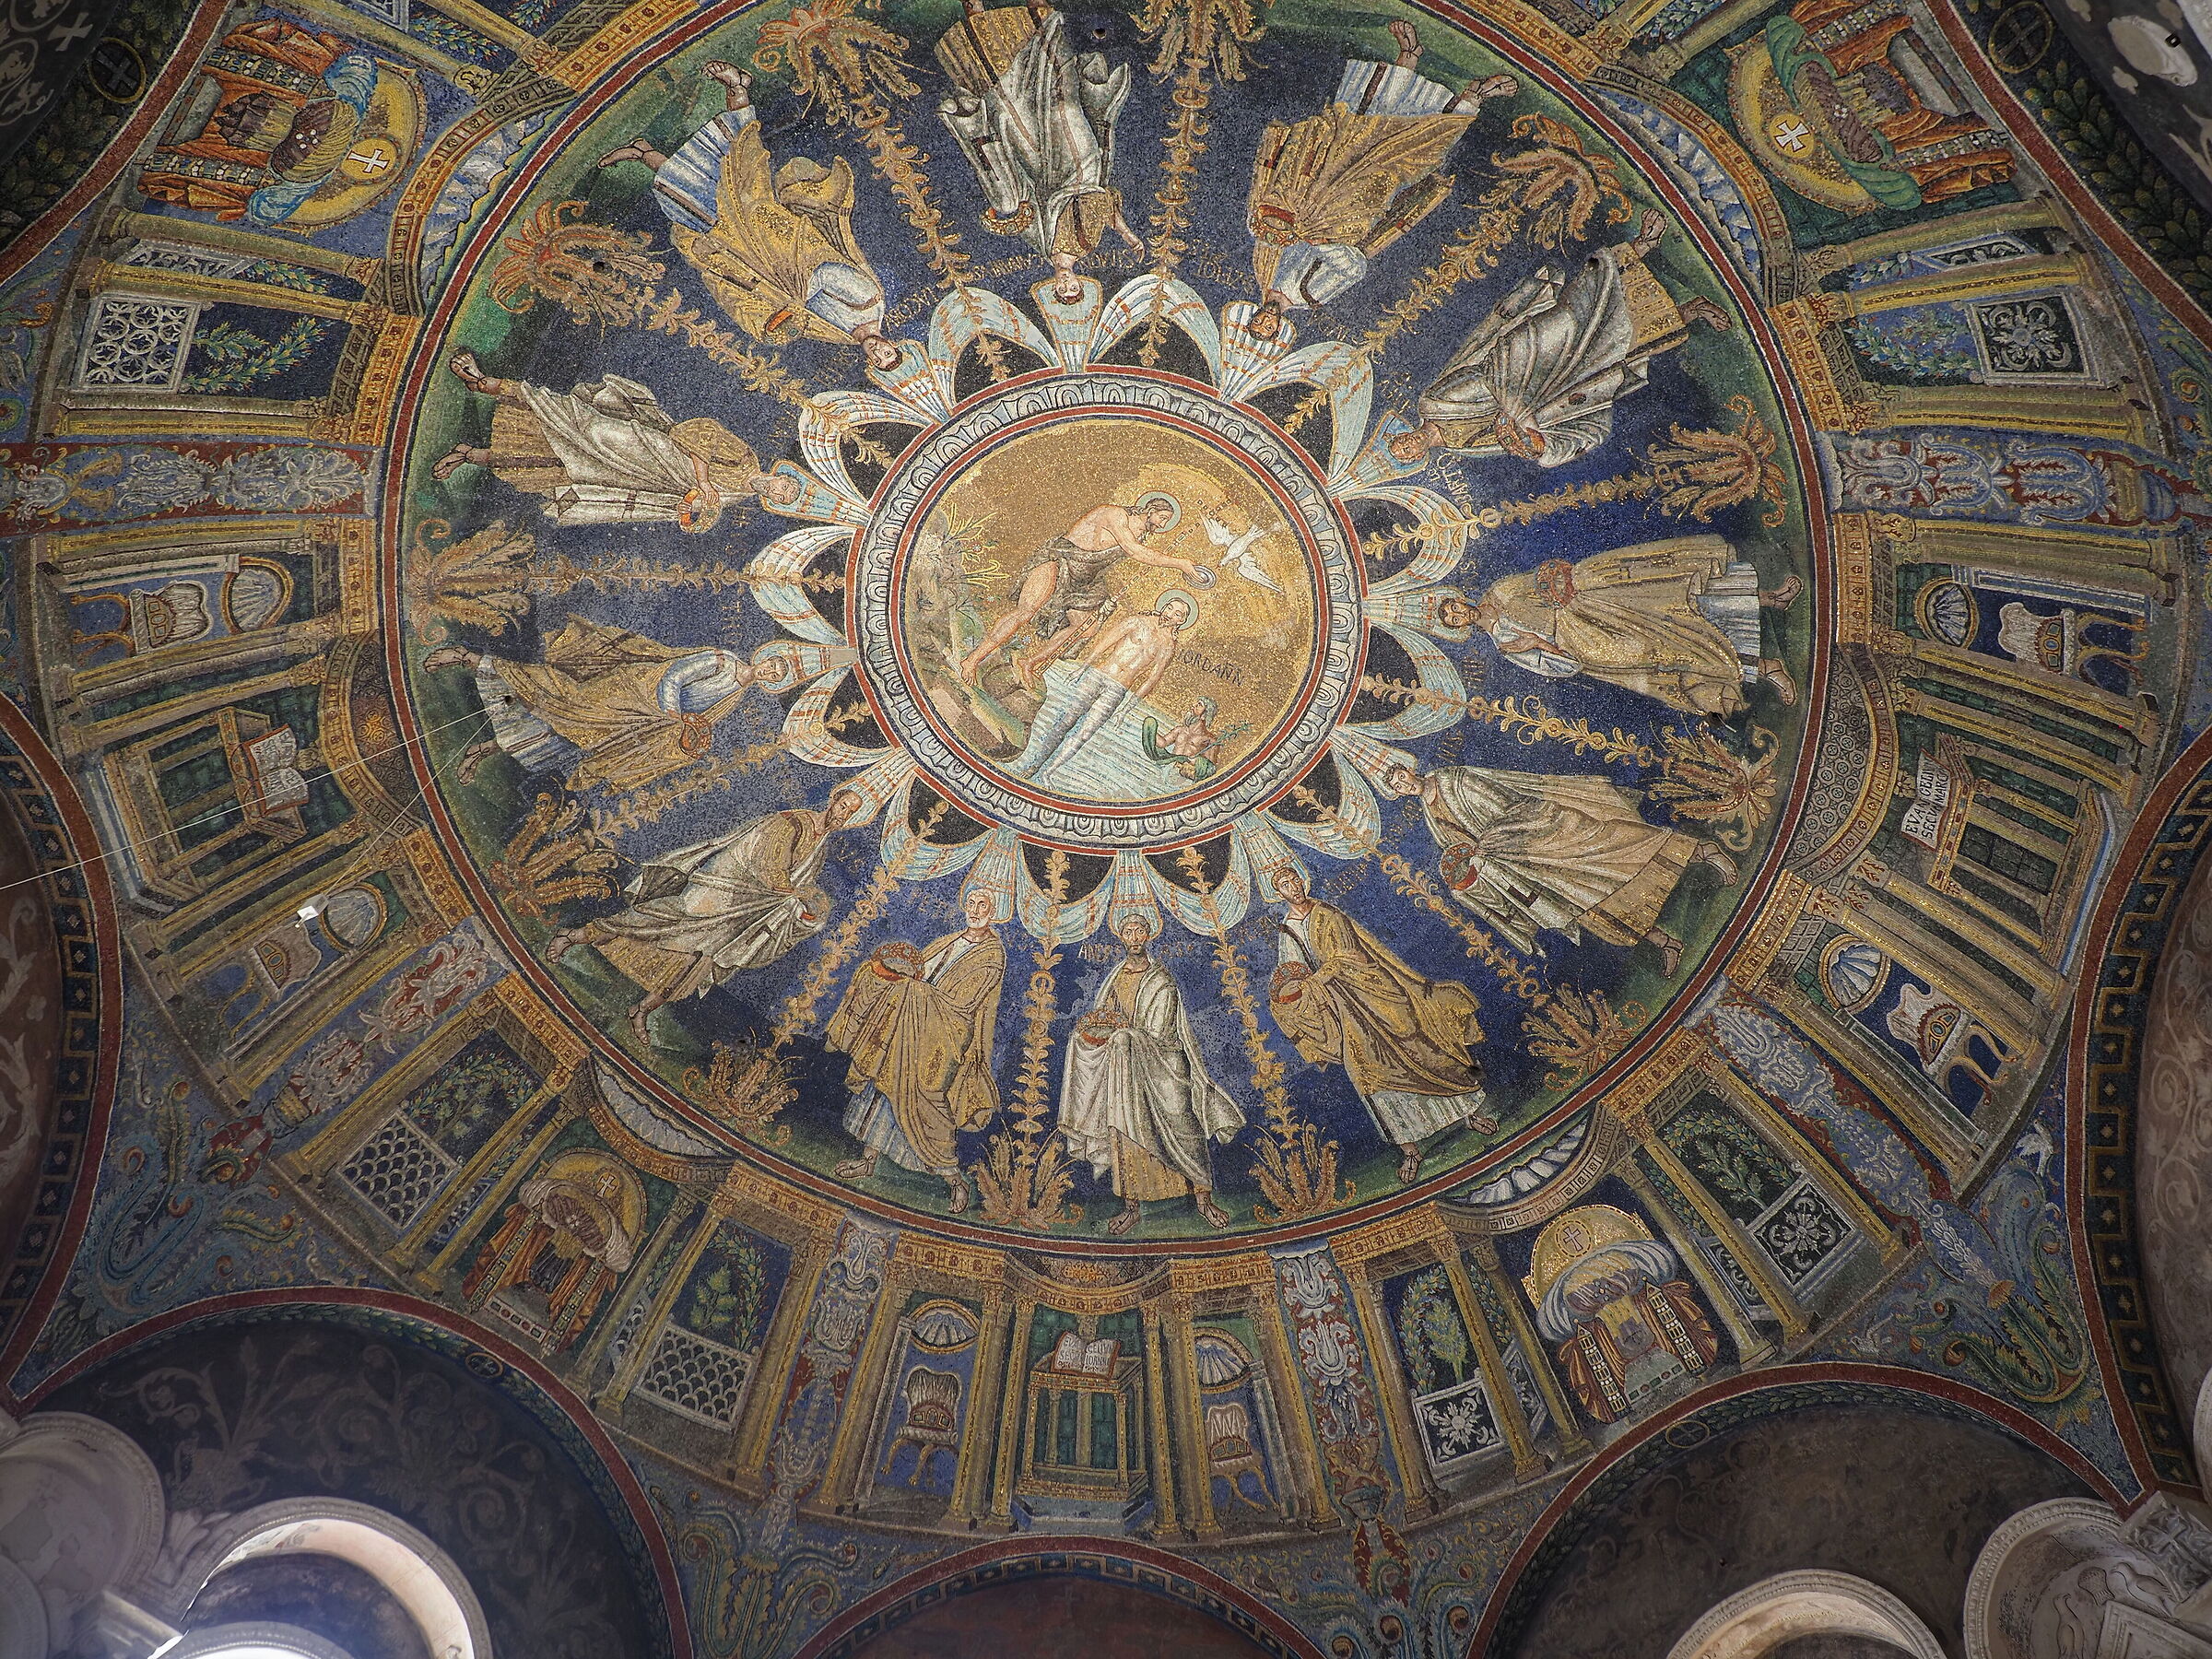 Inside the Basilica of San Vitale...